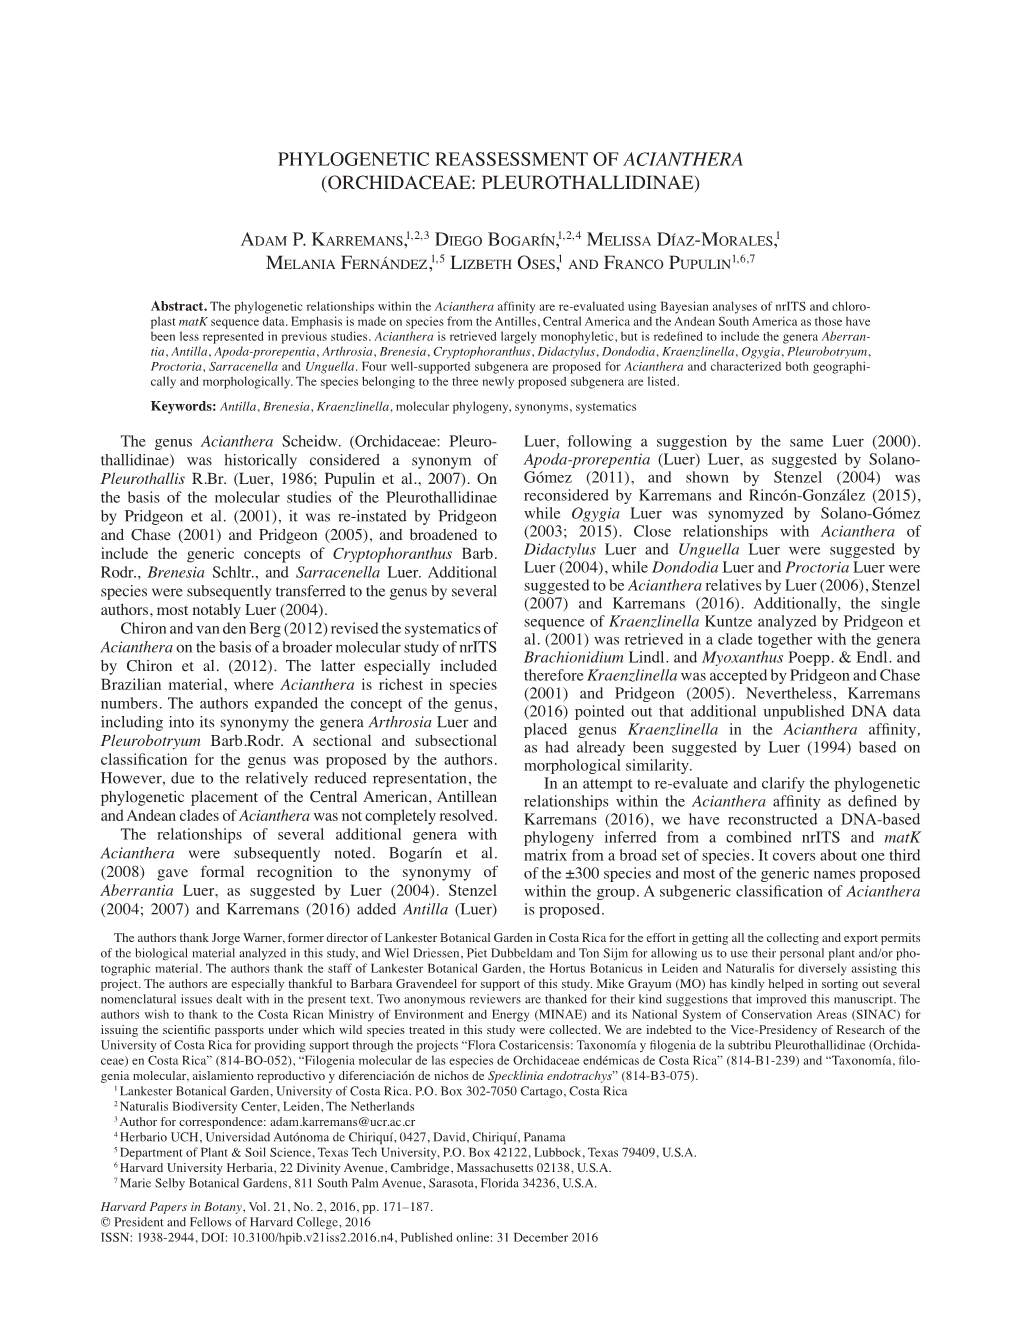 Phylogenetic Reassessment of Acianthera (Orchidaceae: Pleurothallidinae)